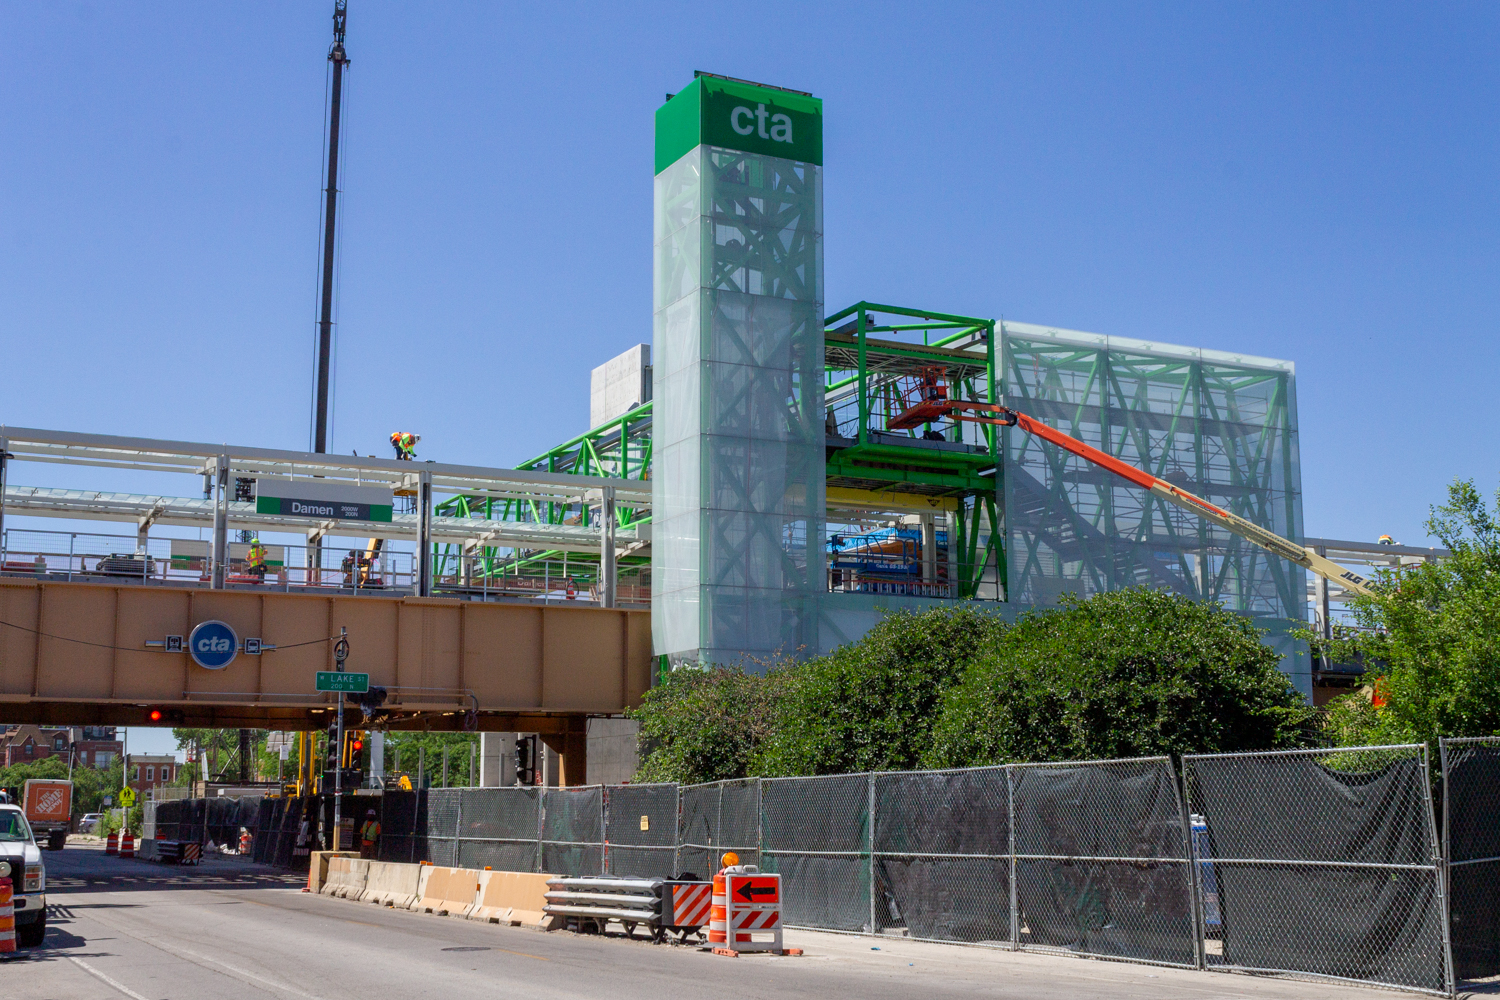 CTA Damen Green Line station construction